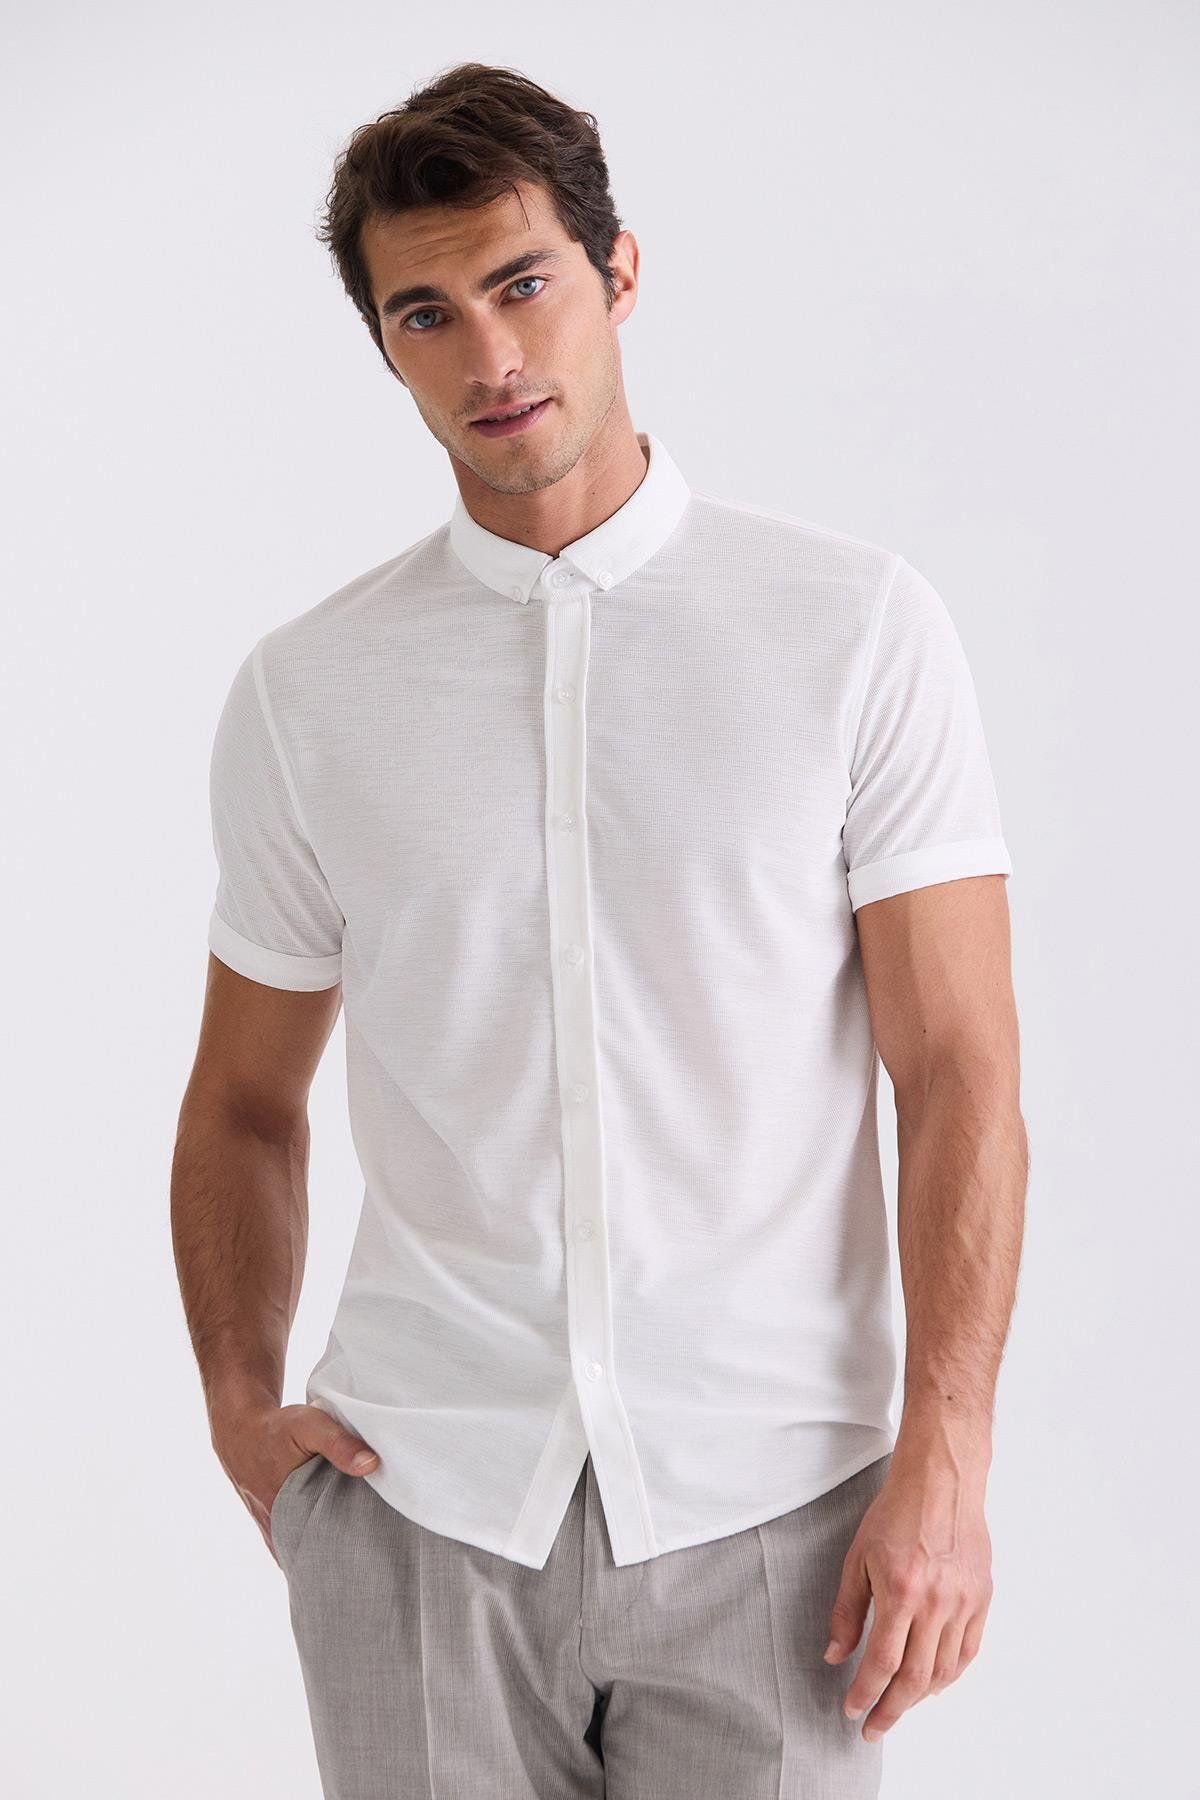 Jakamen Beyaz Slim Fit Gömlek Yaka Düğmeli T-Shirt